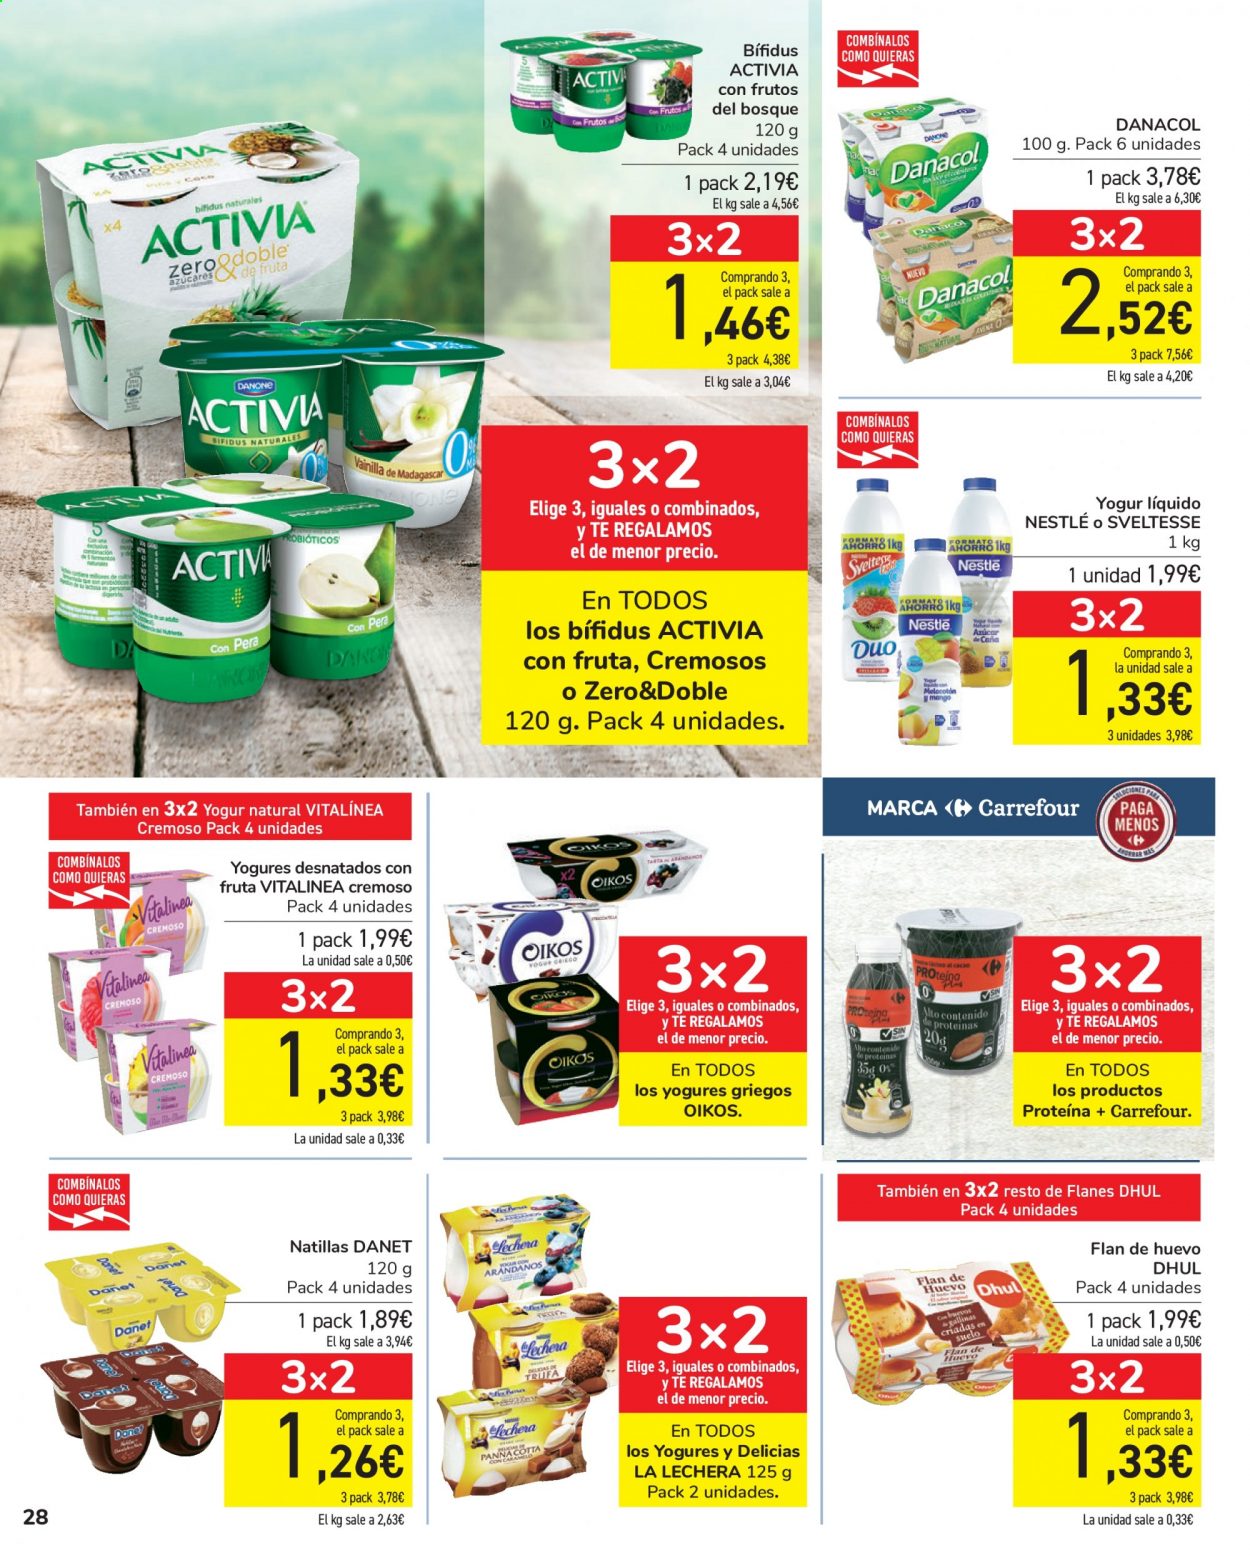 thumbnail - Folleto actual Carrefour - 27/04/21 - 10/05/21 - Ventas - flan, natillas, Activia, yogur natural, Danacol, Nestlé. Página 28.